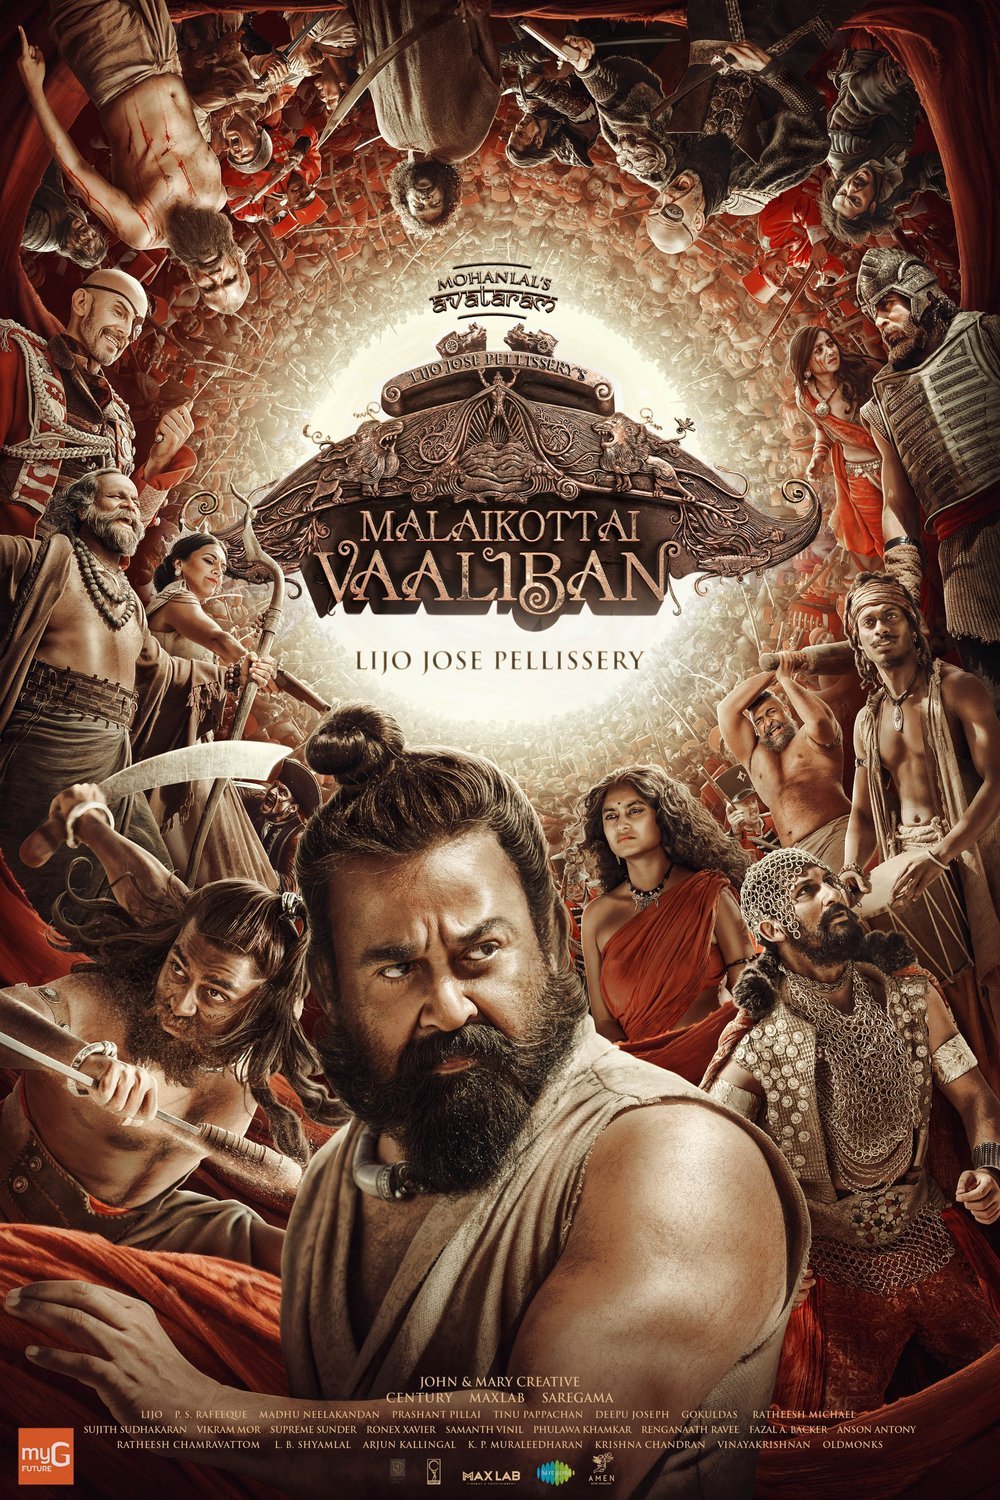 Tamil poster of the movie Malaikottai Vaaliban